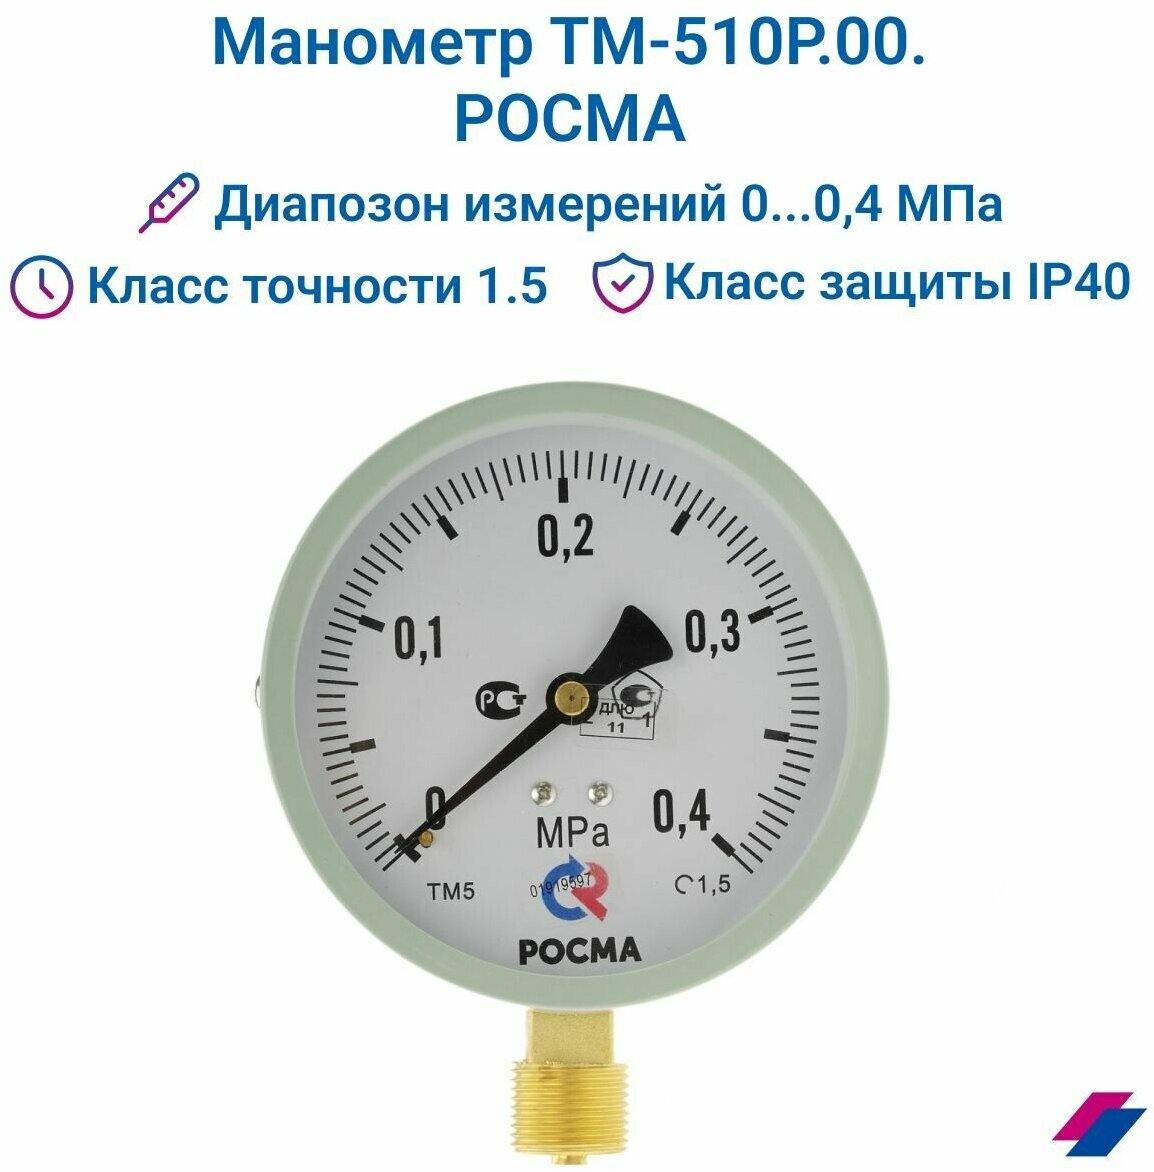 Манометр ТМ-510Р.00 (0.0,4 МРа) М20х1,5: класс точности -1,5 росма